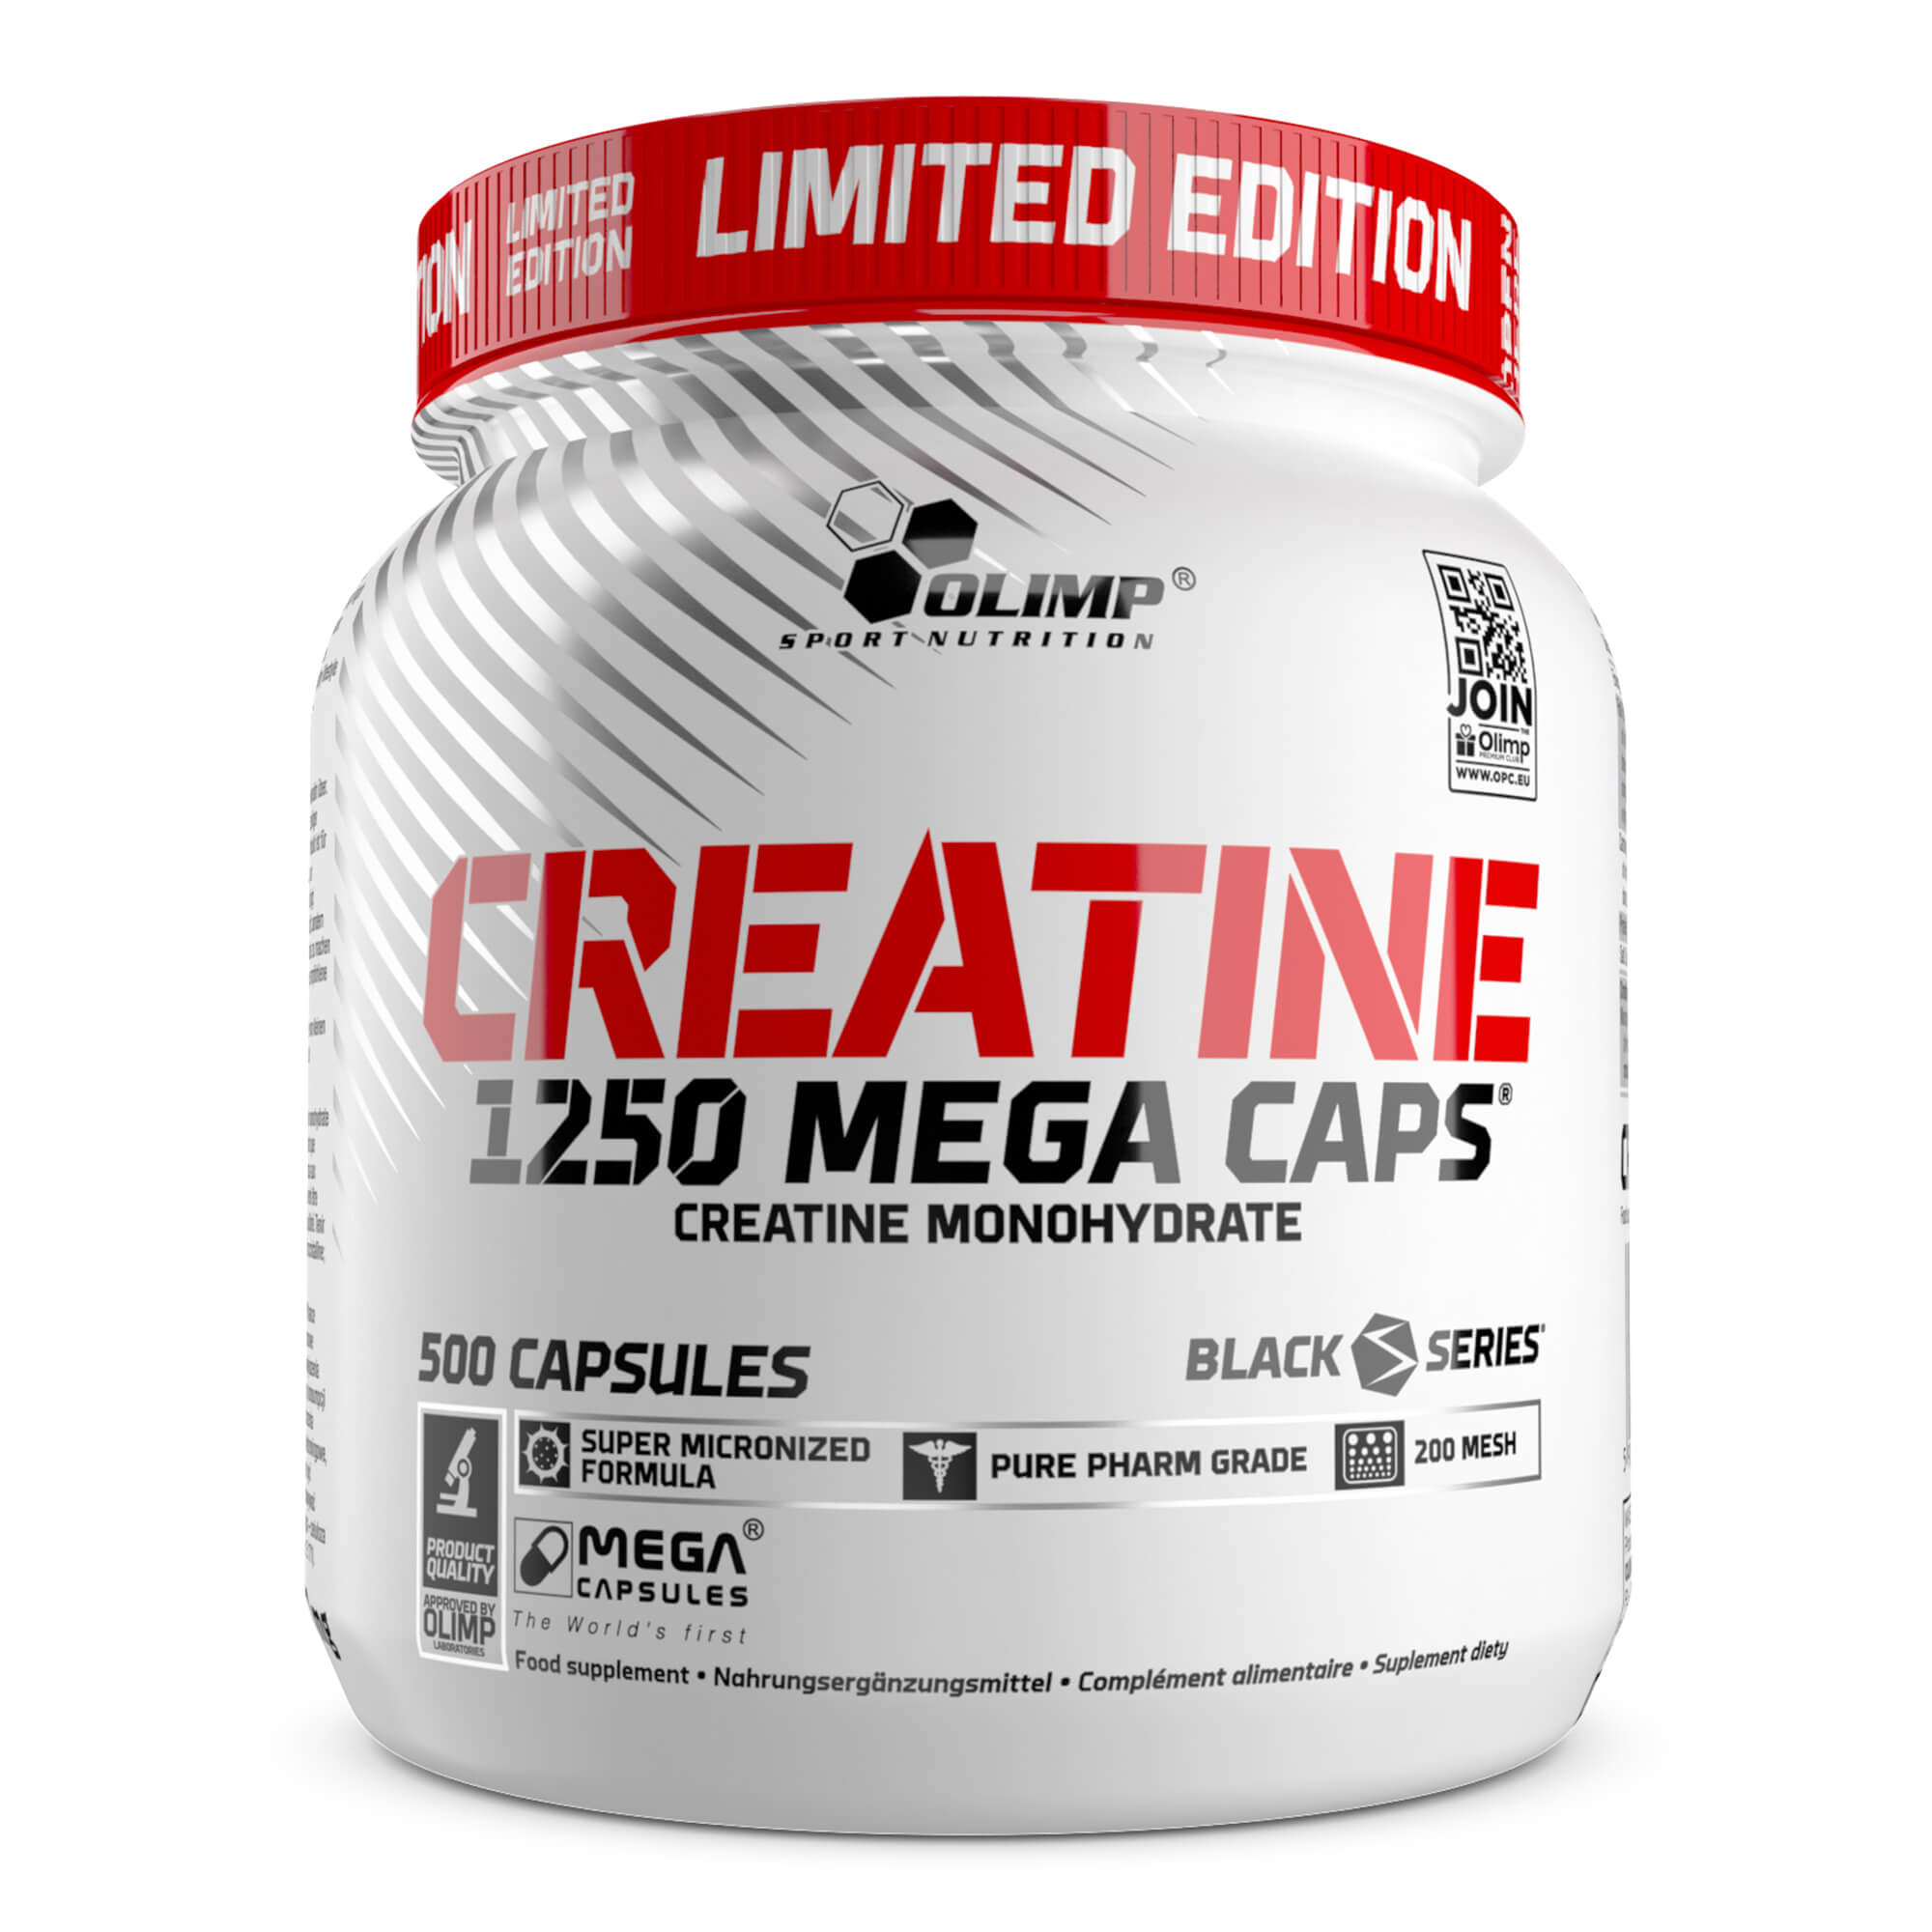 Olimp Creatine 1250 Mega Caps Limited Edition suplement diety - kreatyna,  500 kaps./1 opak. | hebe.pl